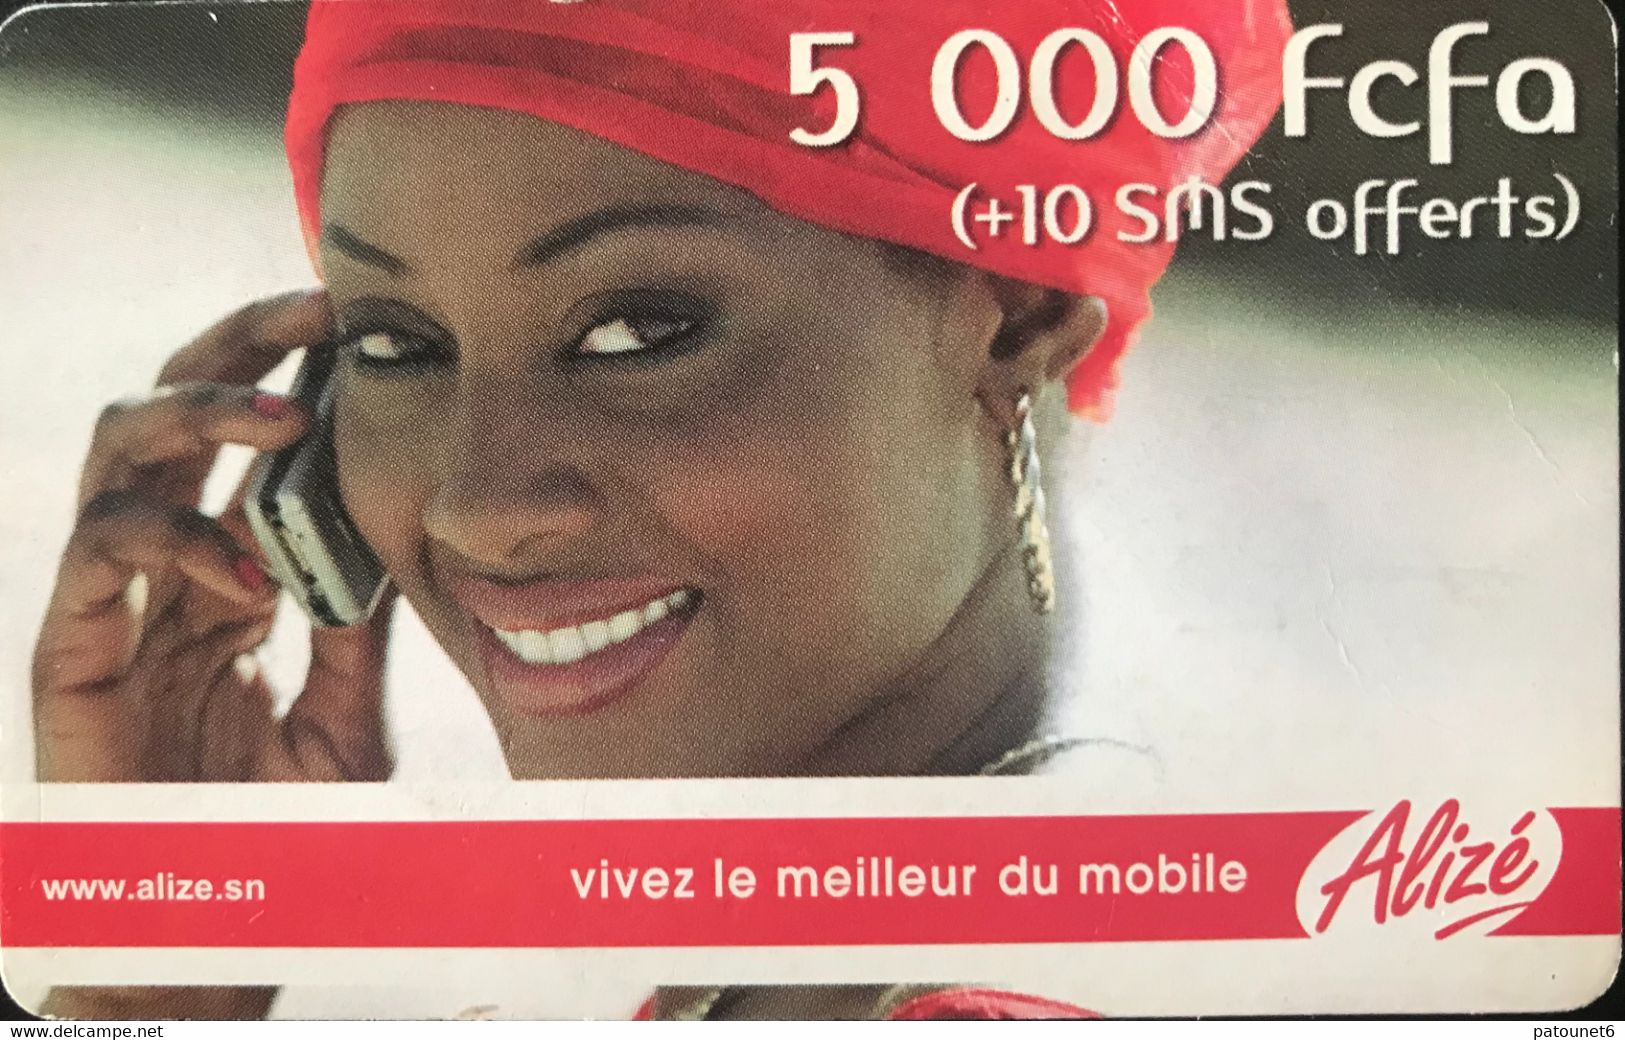 SENEGAL  -  Rechage  -  Diamono  -  Alizé  -  5.000 FCFA + 10 SMS - Senegal